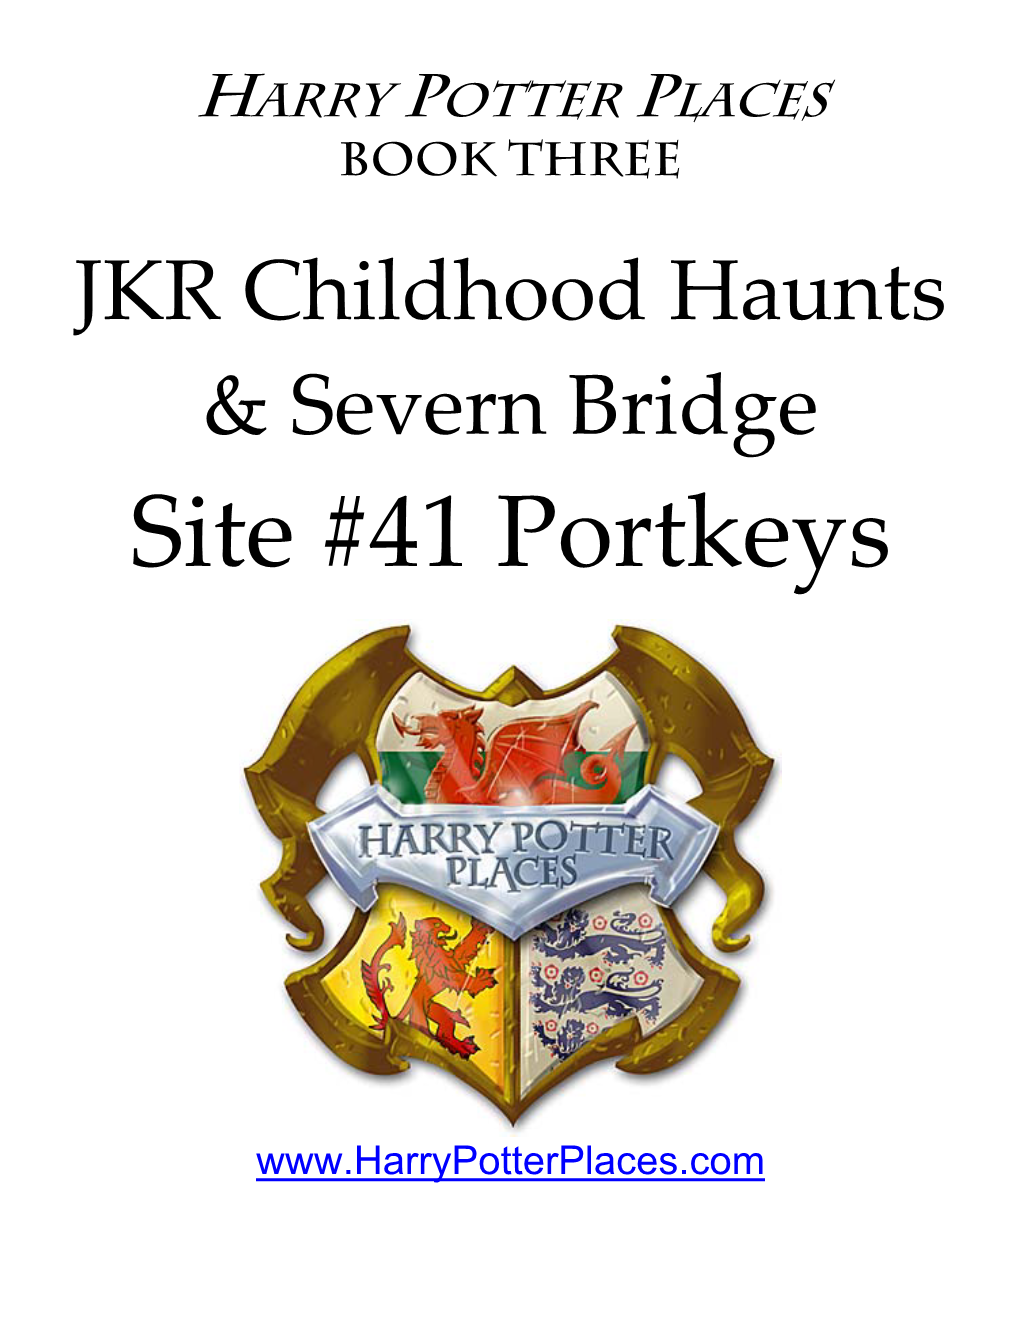 JKR Childhood Haunts & Severn Bridge (Site